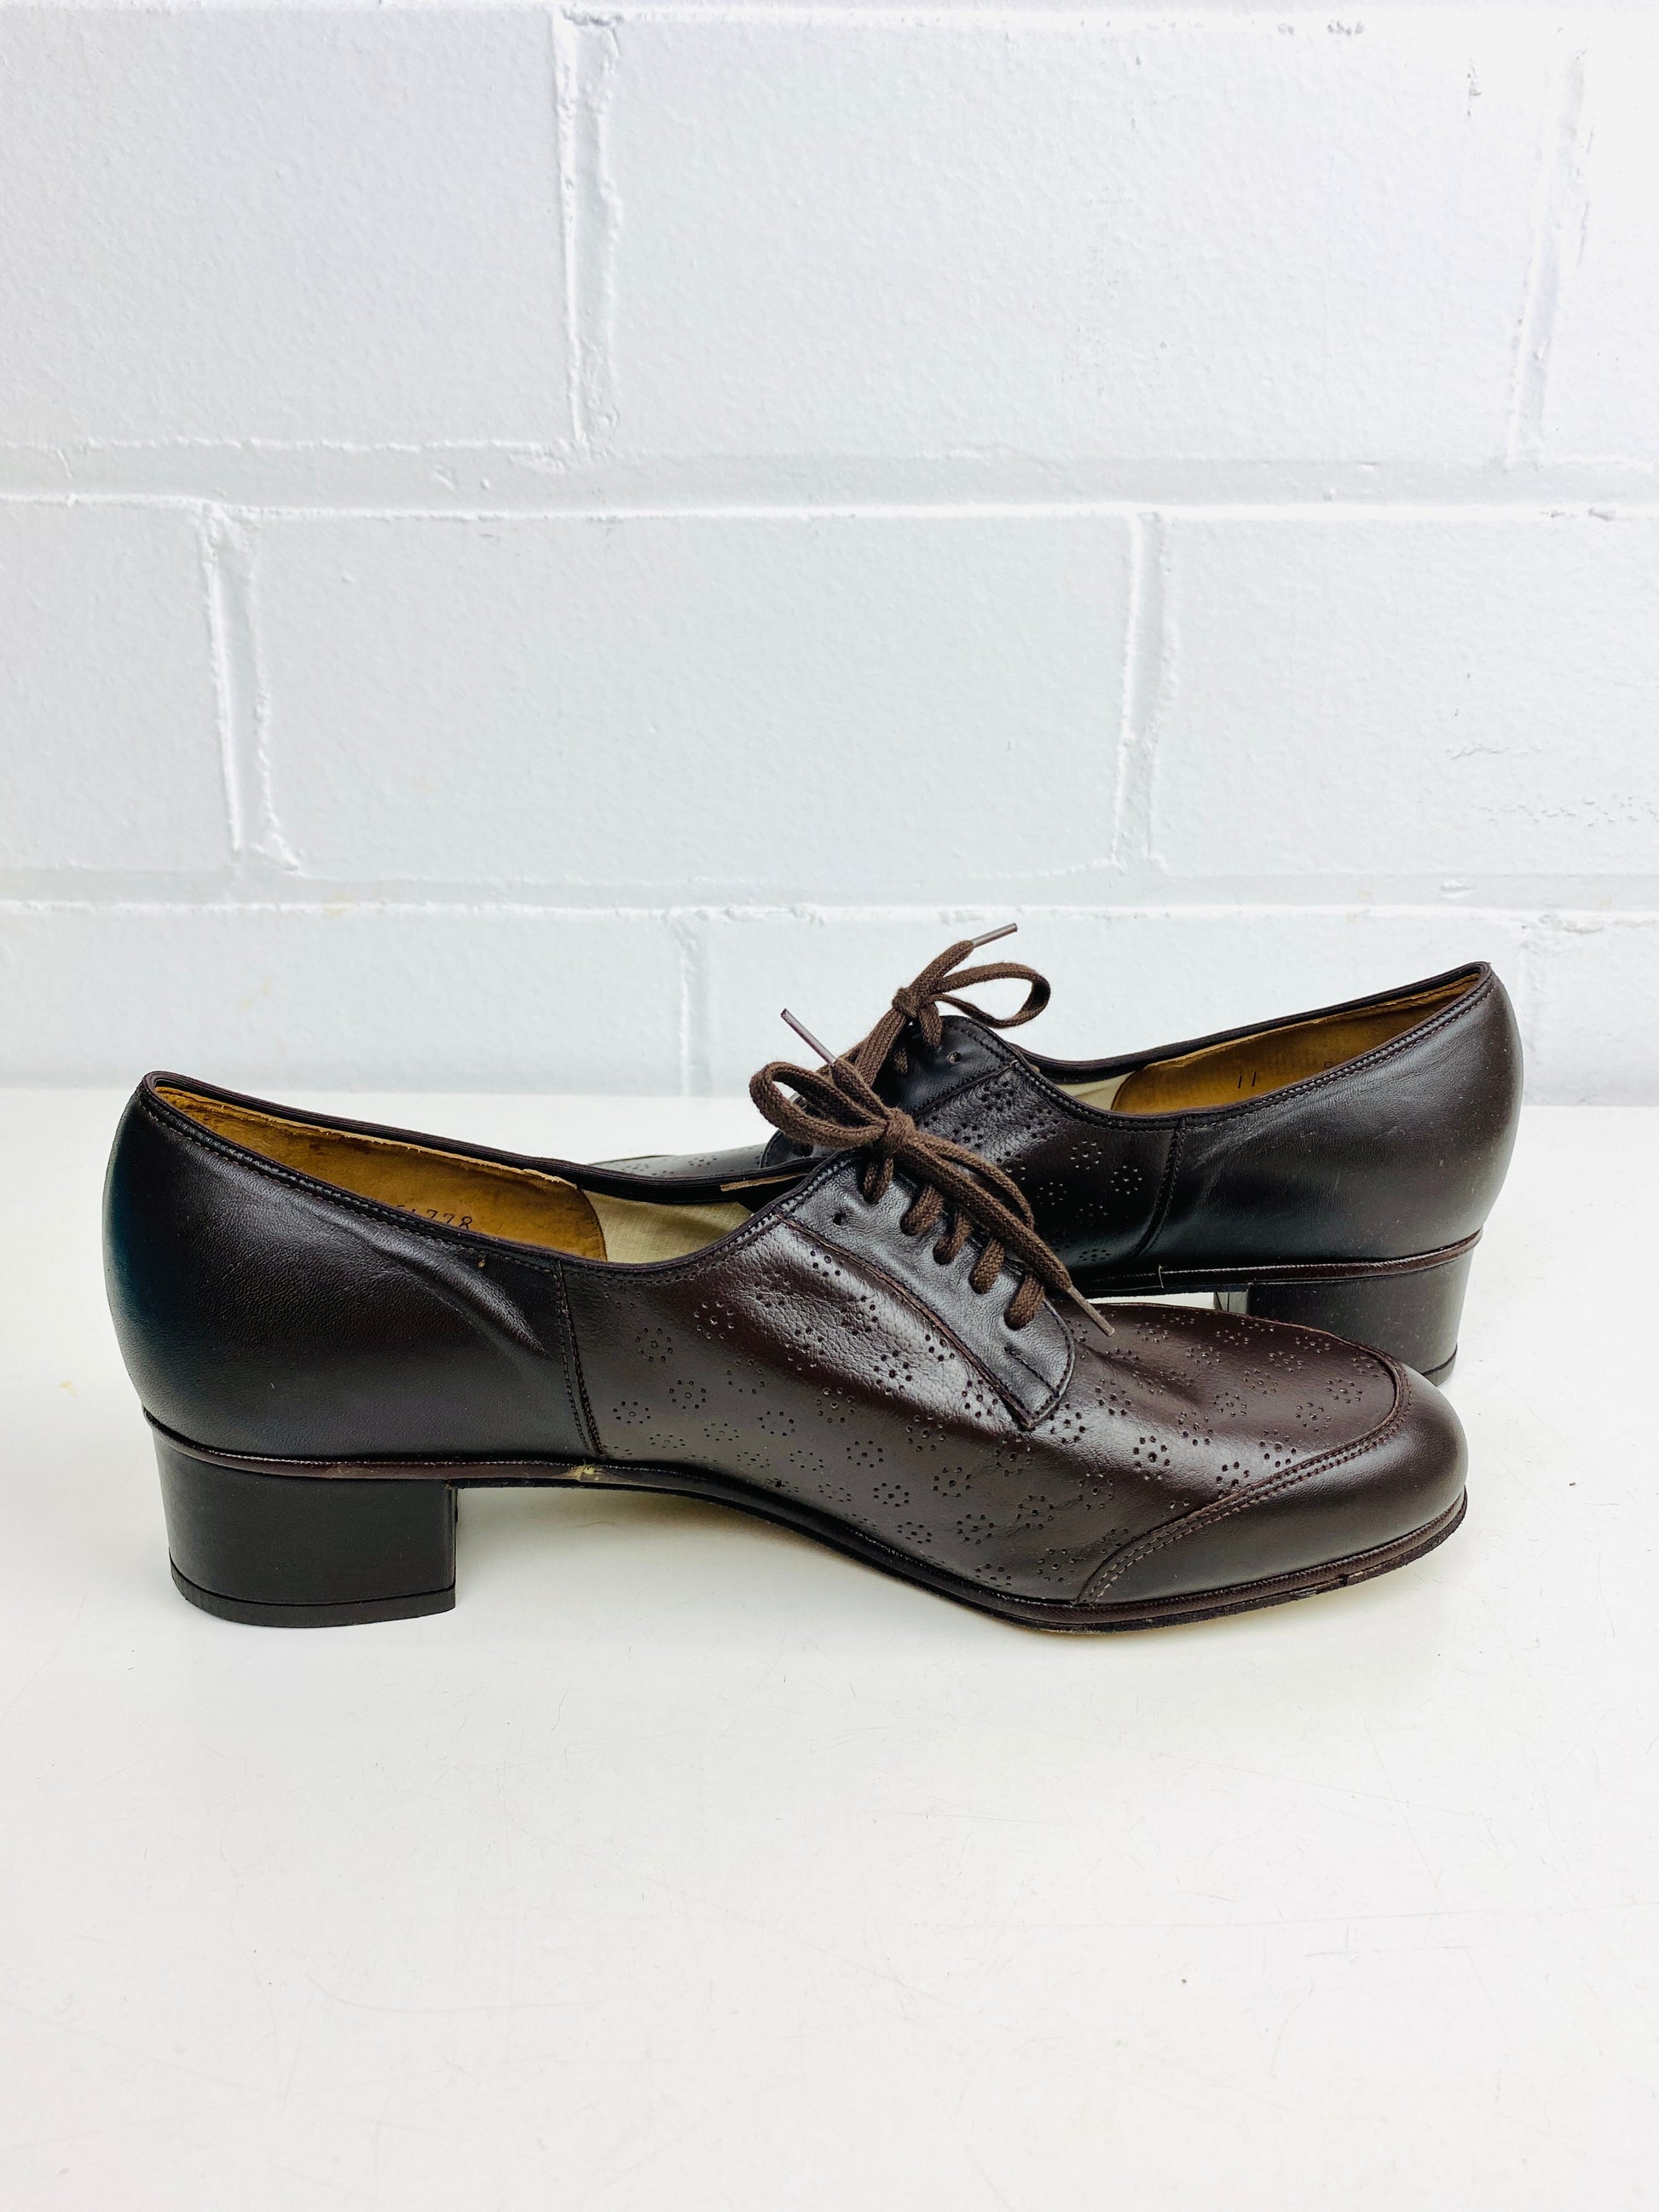 Vintage Deadstock Shoes, Women's 1980s Brown Leather Cuban Heel Oxfords, NOS, 1616